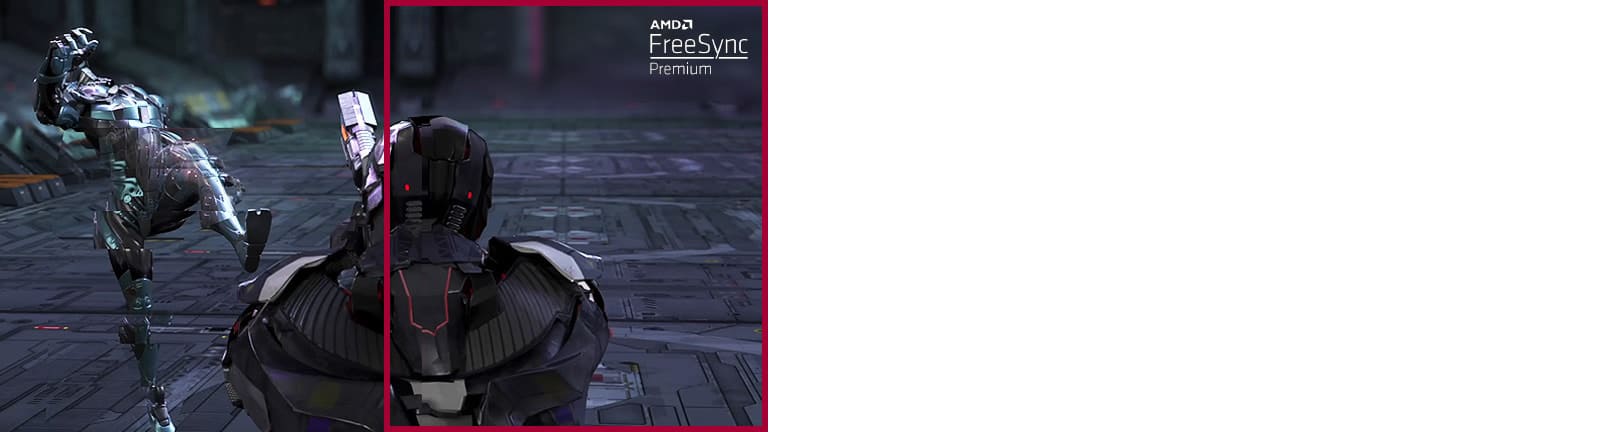 AMD FreeSync™ Premium